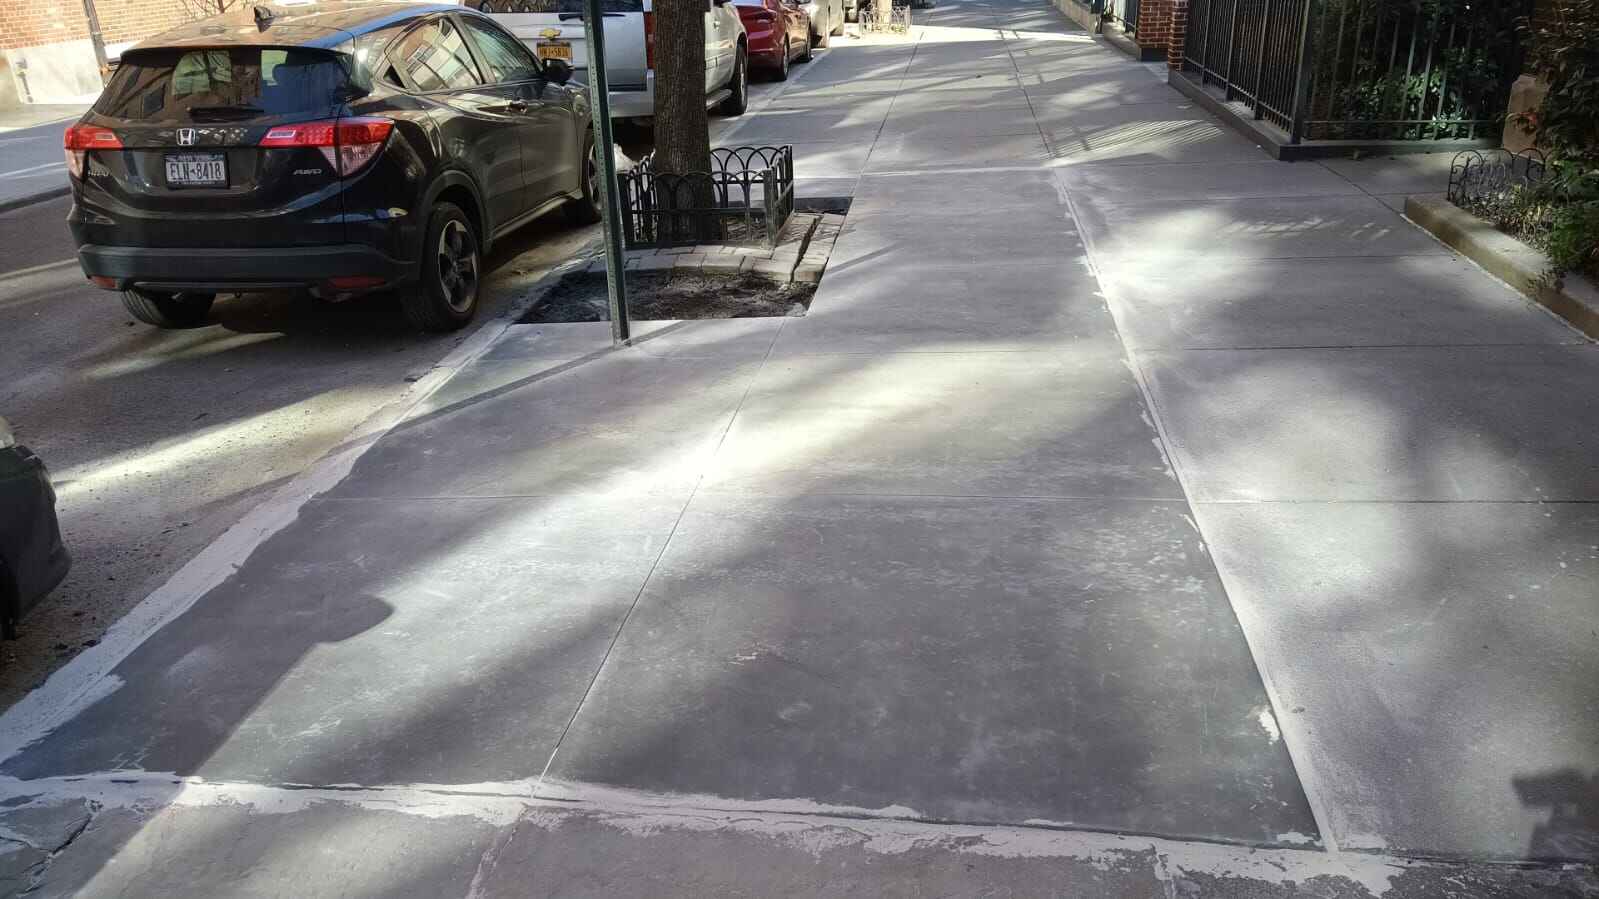 Superior Concrete Repair work done by by Sidewalk Repairs Bronx